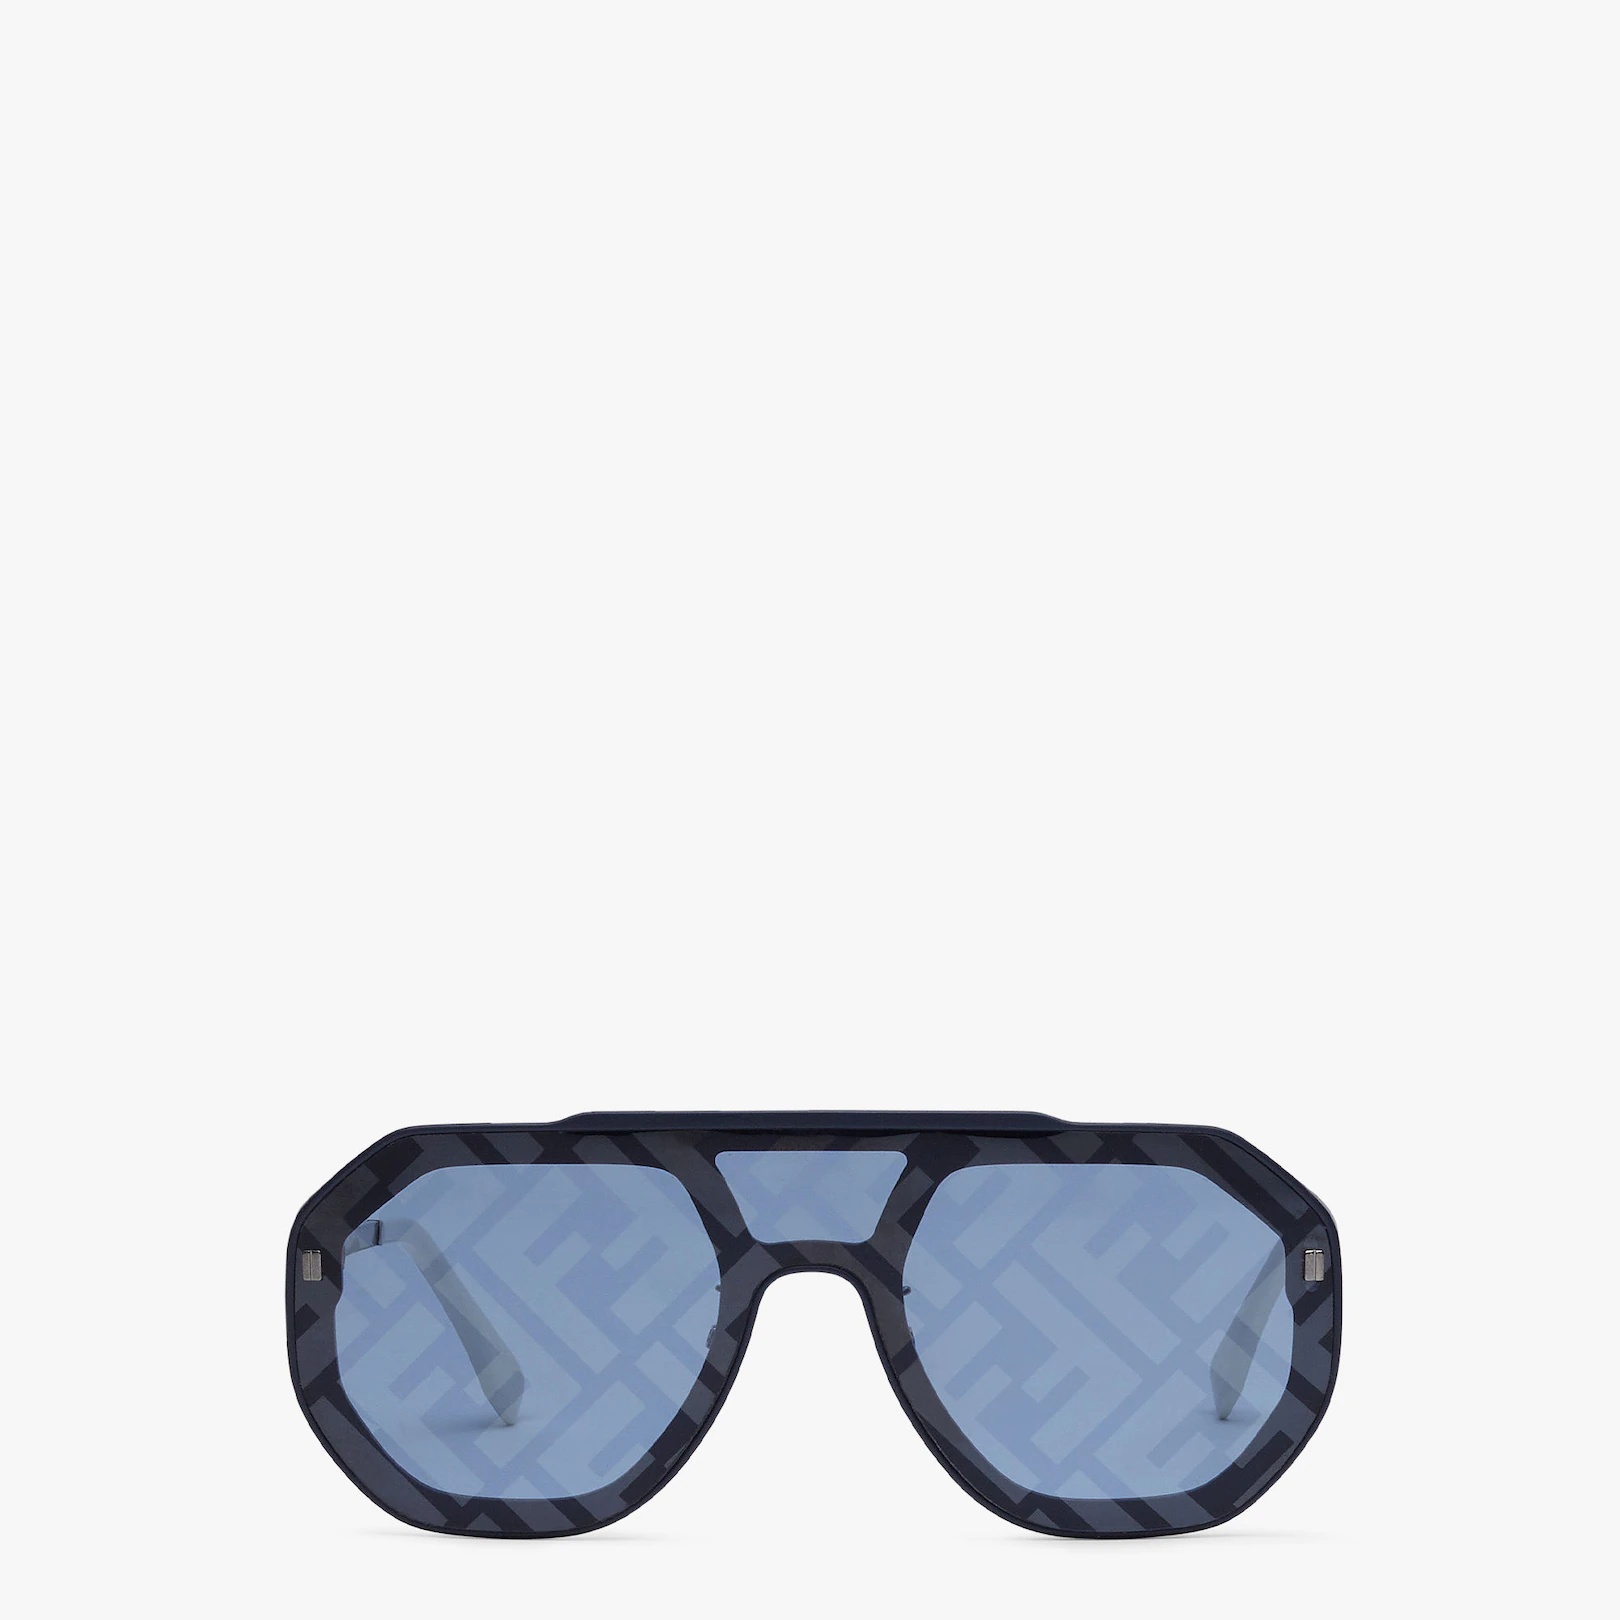 Blue sunglasses - 1